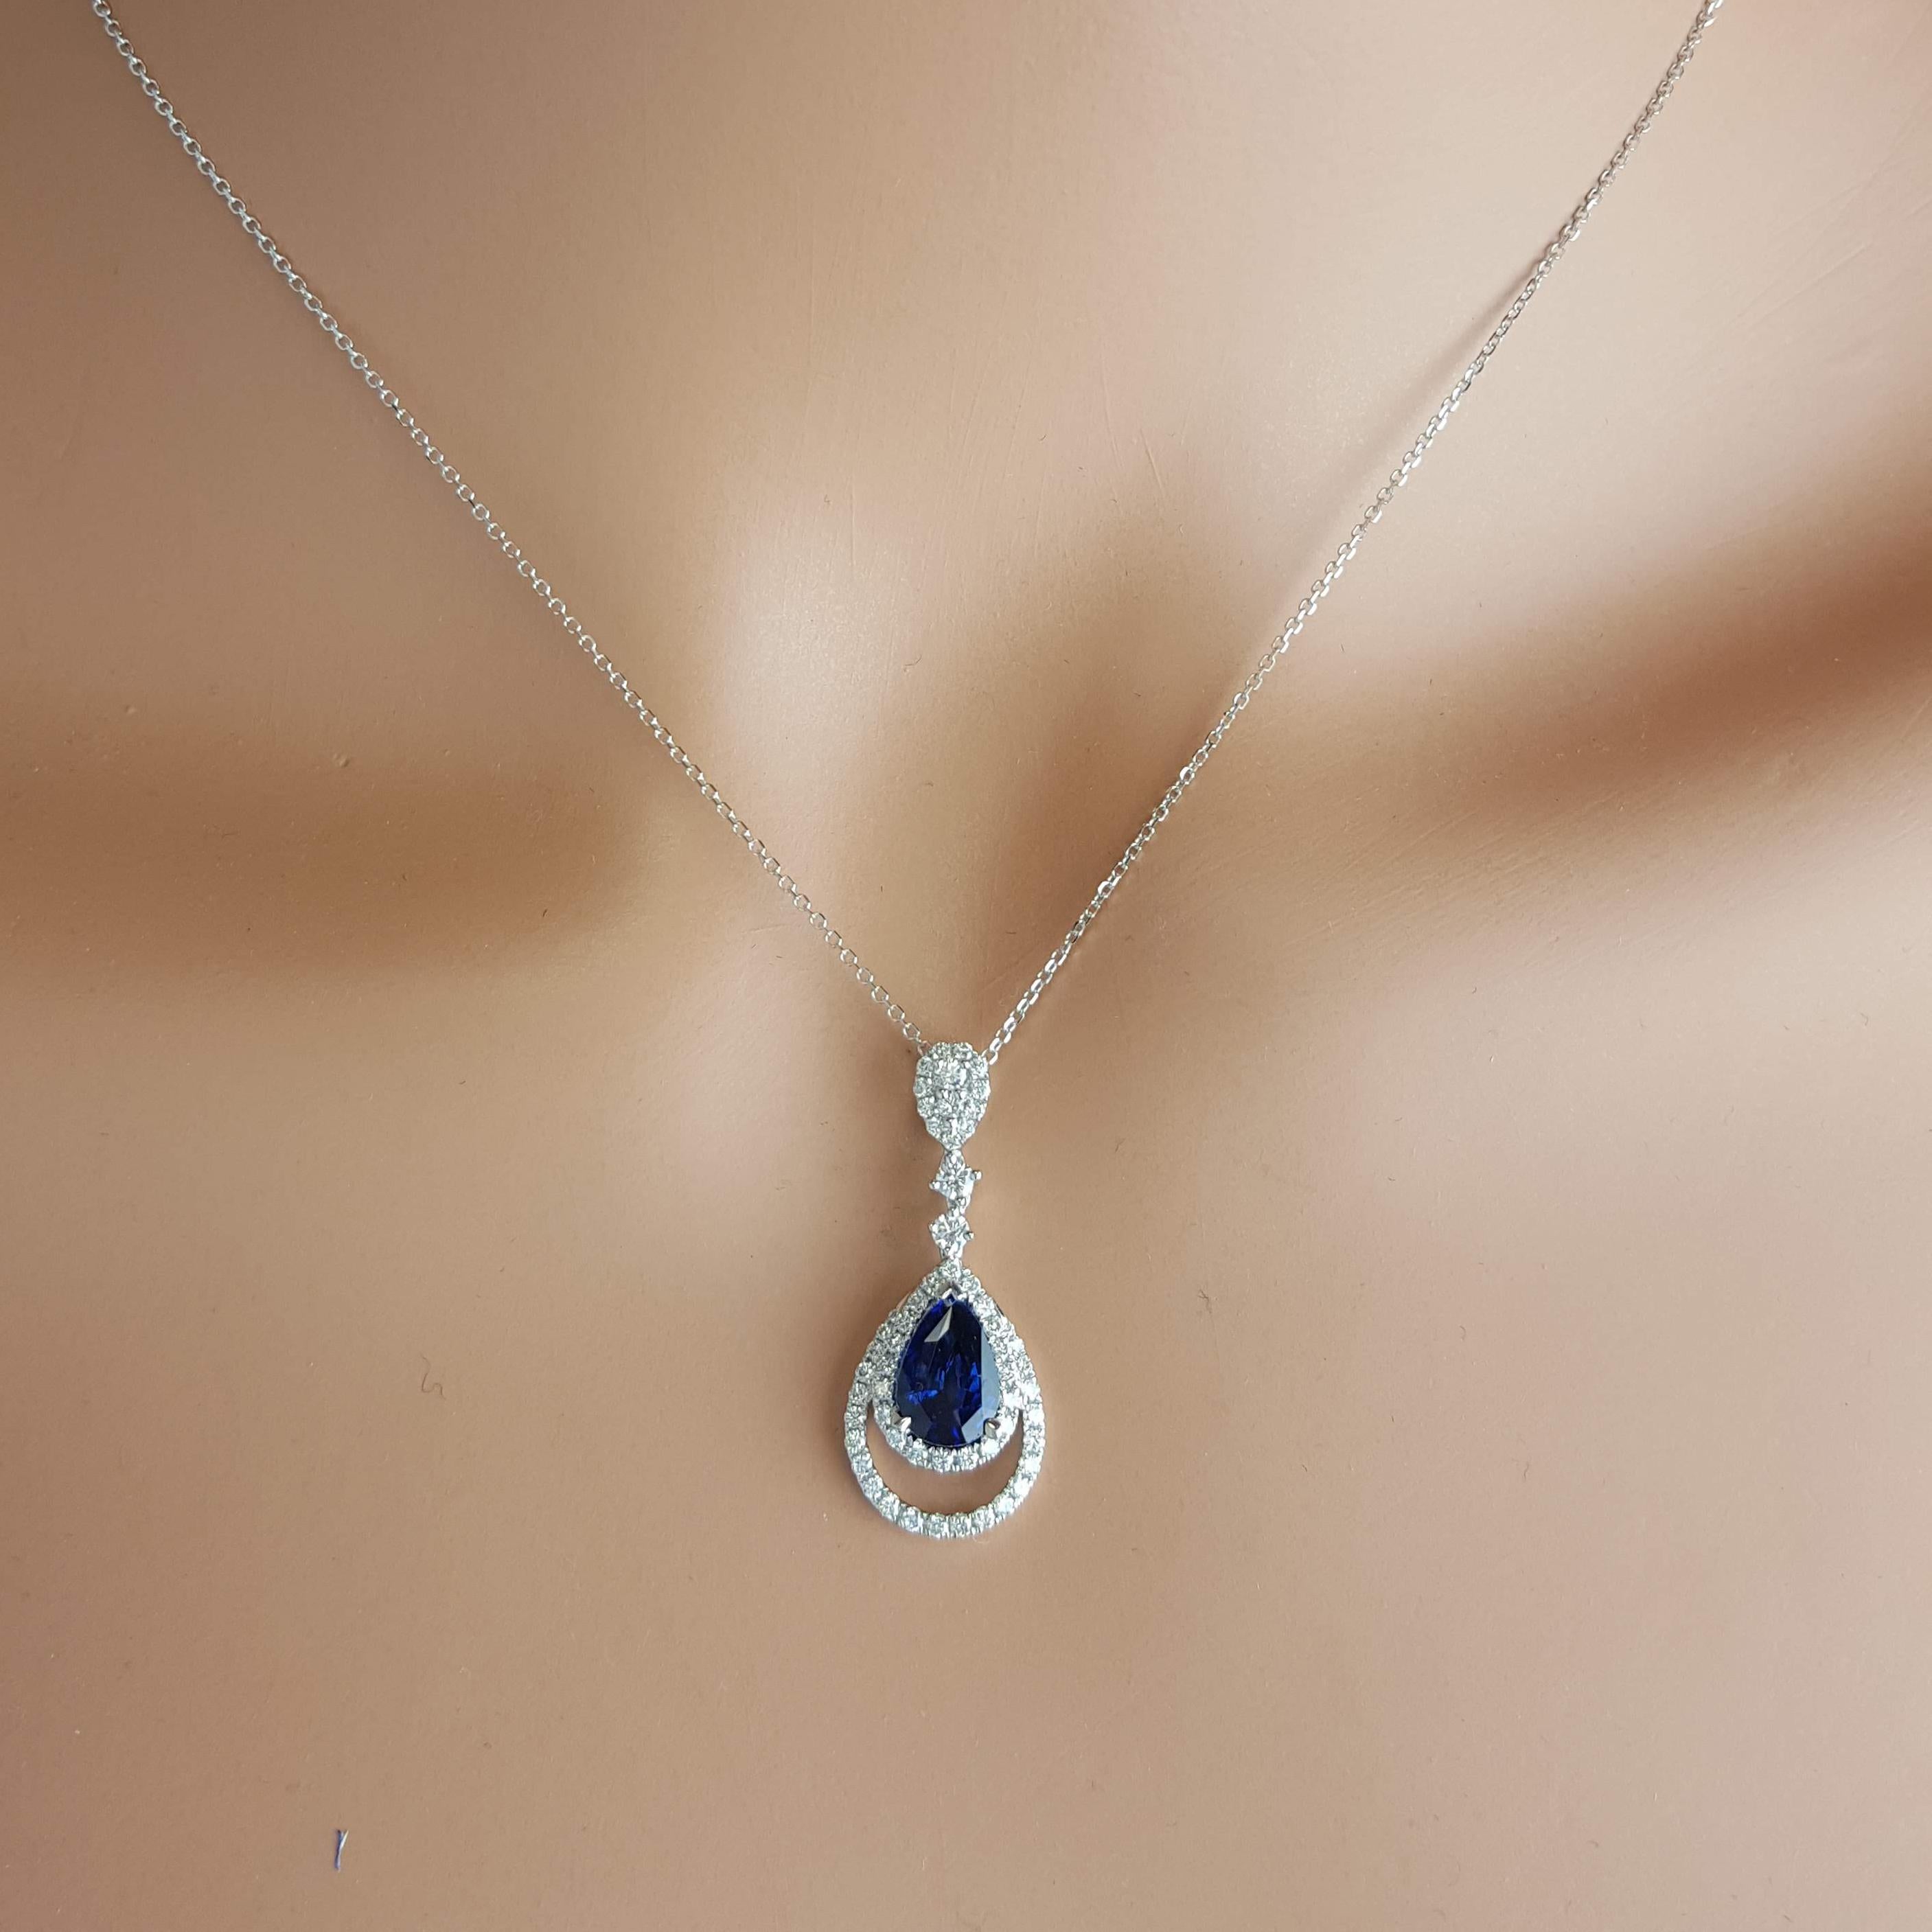 Contemporary 1.46 Carat Pear Shape Vivid Blue Sapphire and Diamond Pendant